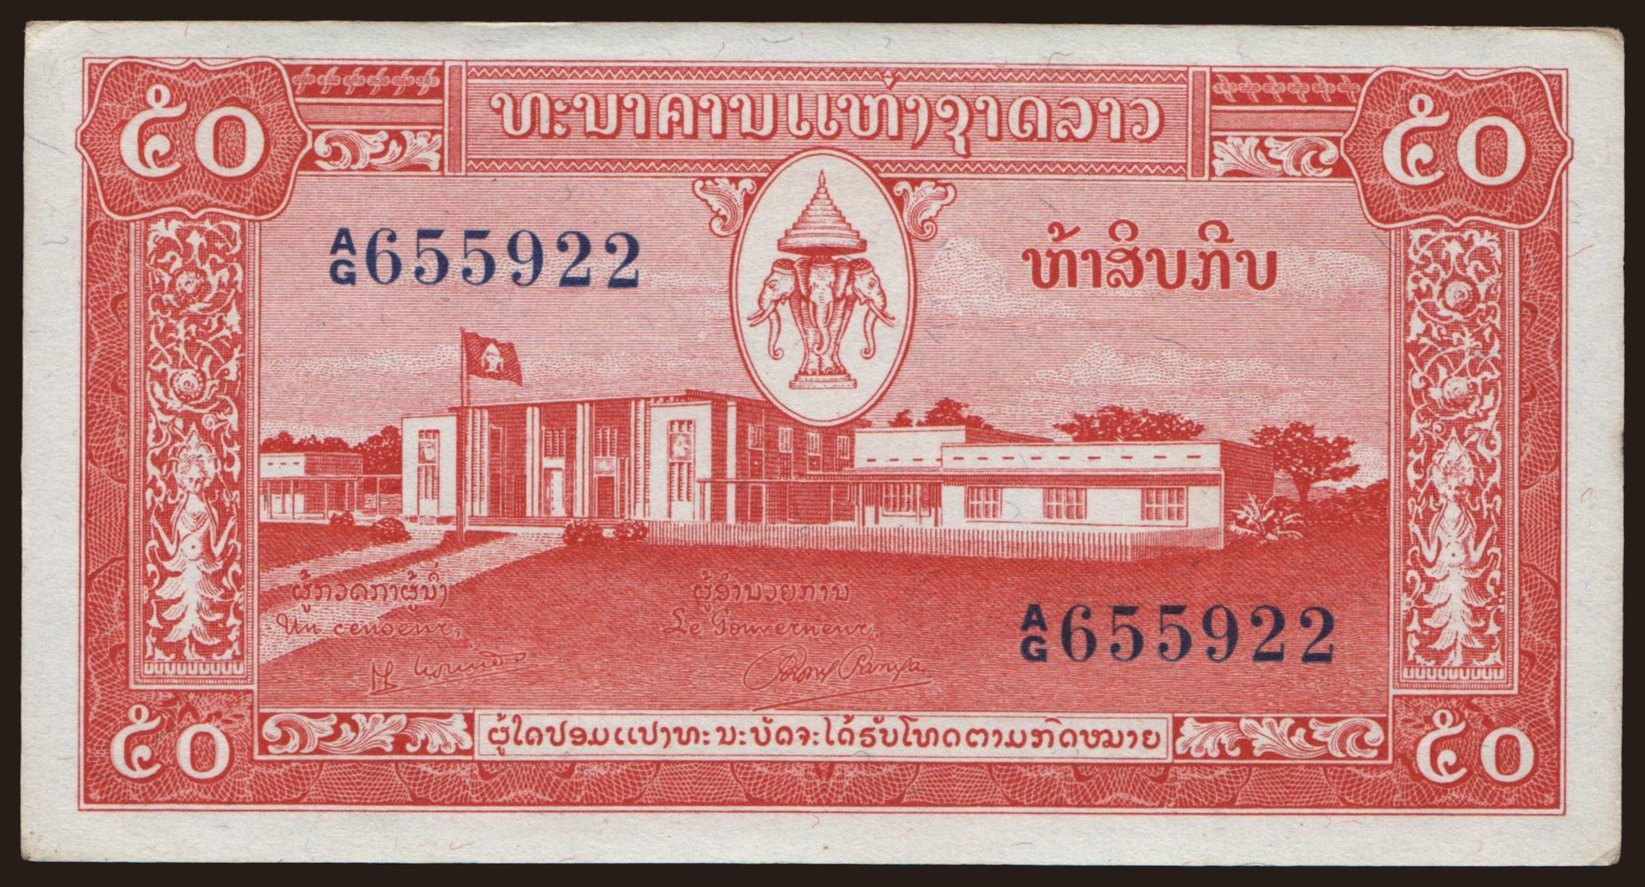 50 kip, 1957